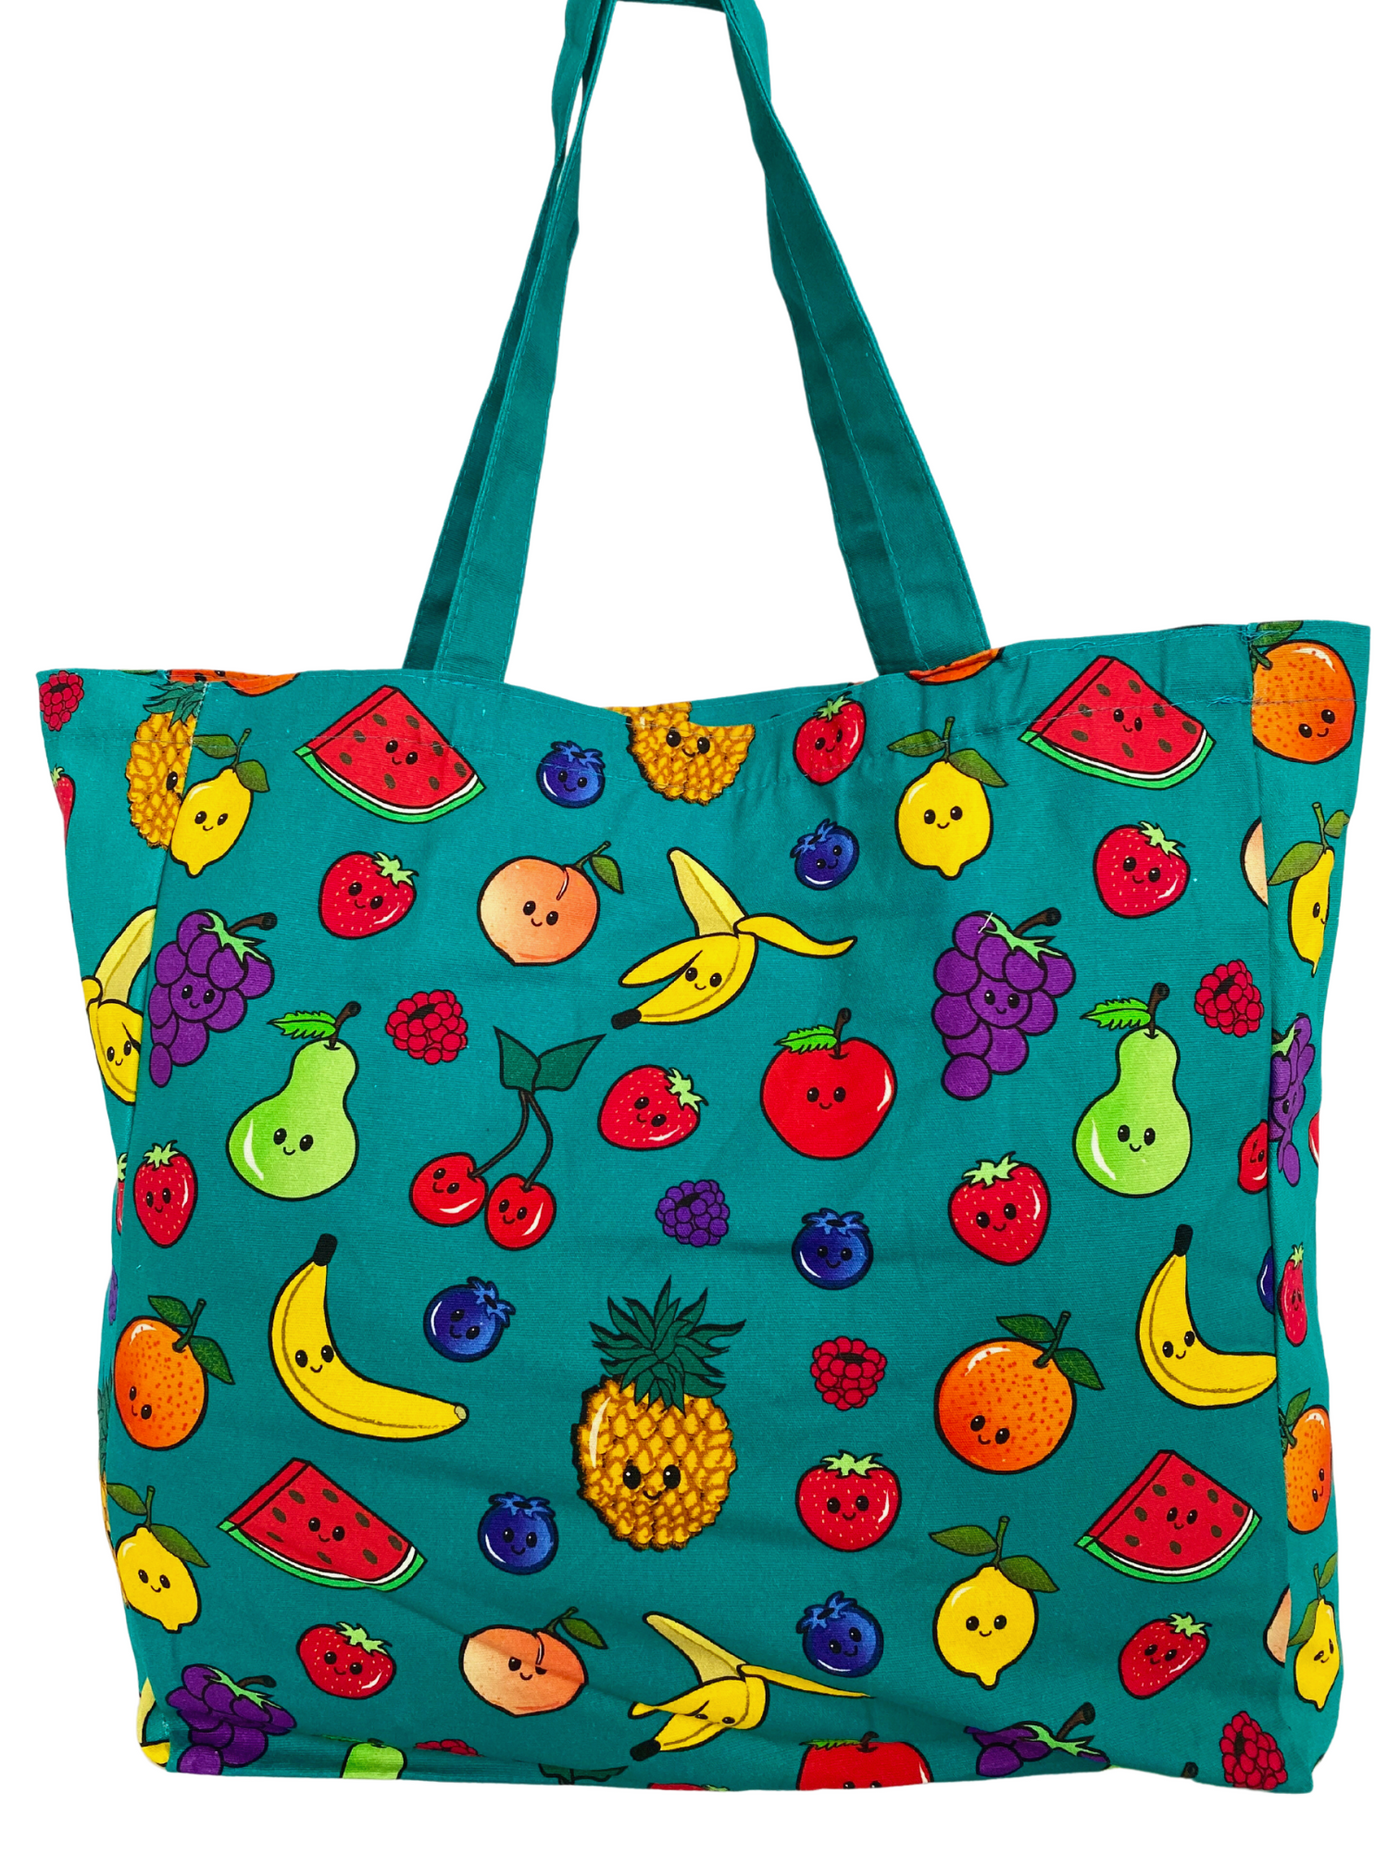 Illustrated Tote Bag: Cute Fruits